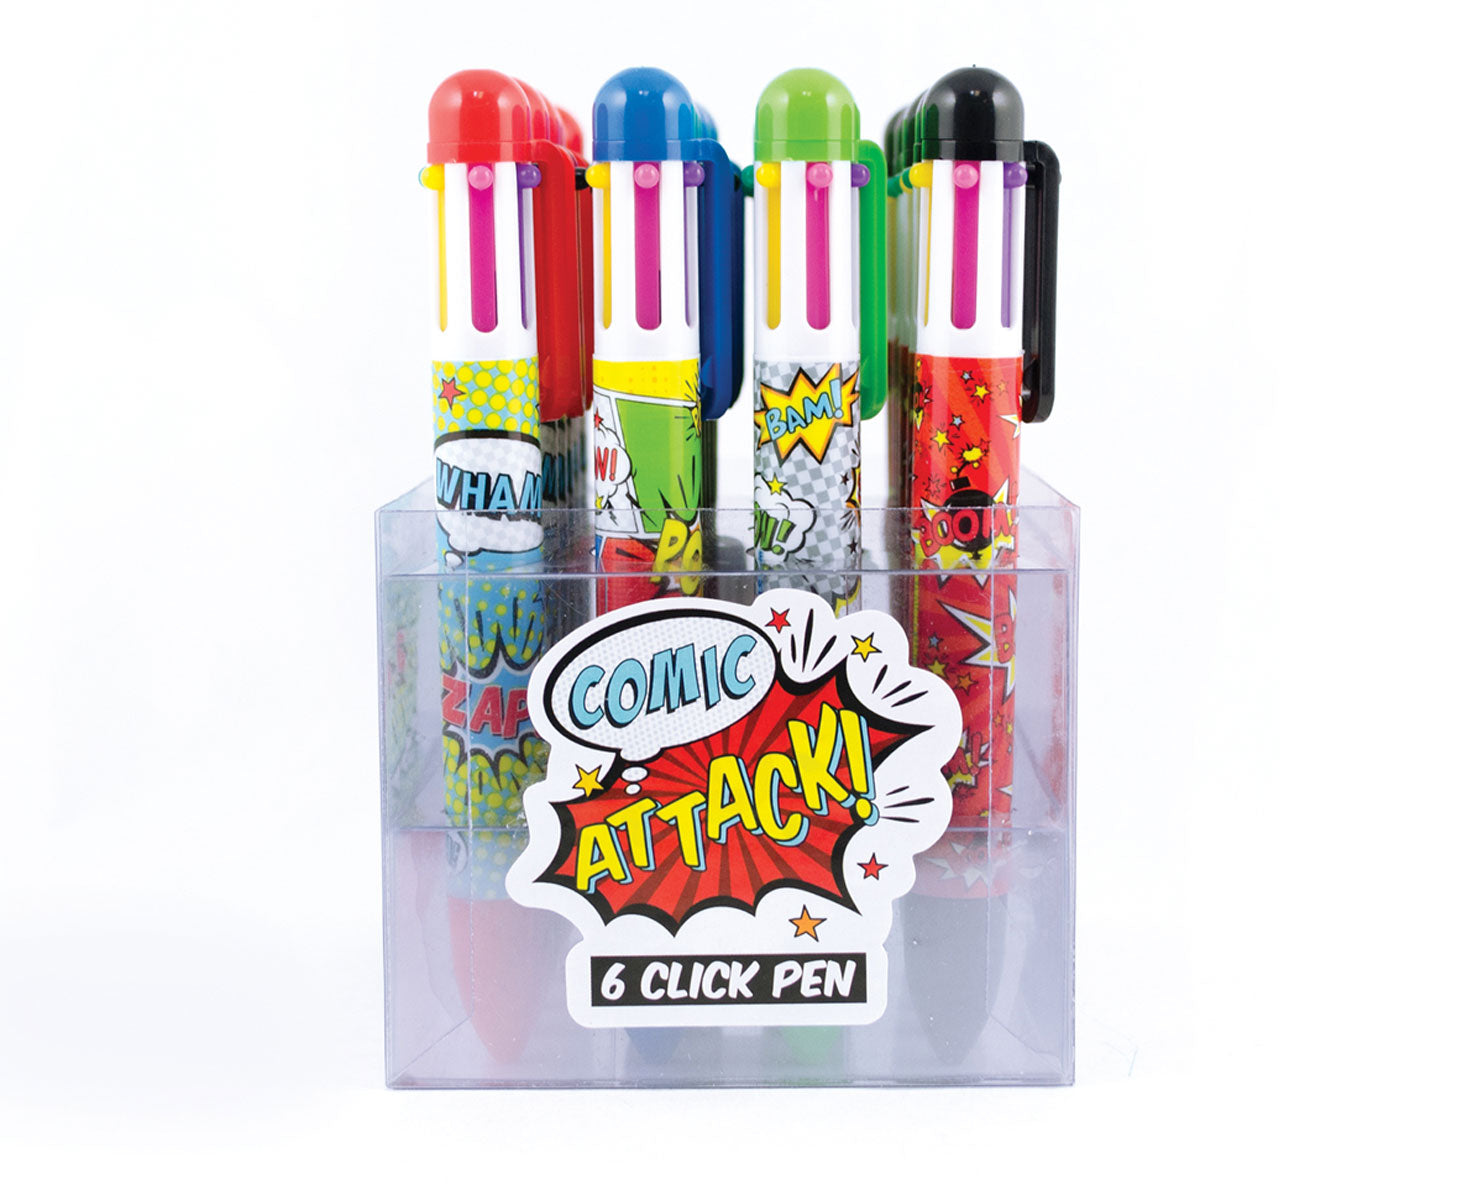 Comic Attack 6 Click Multi Color Pen – Sugar Moon Bloom